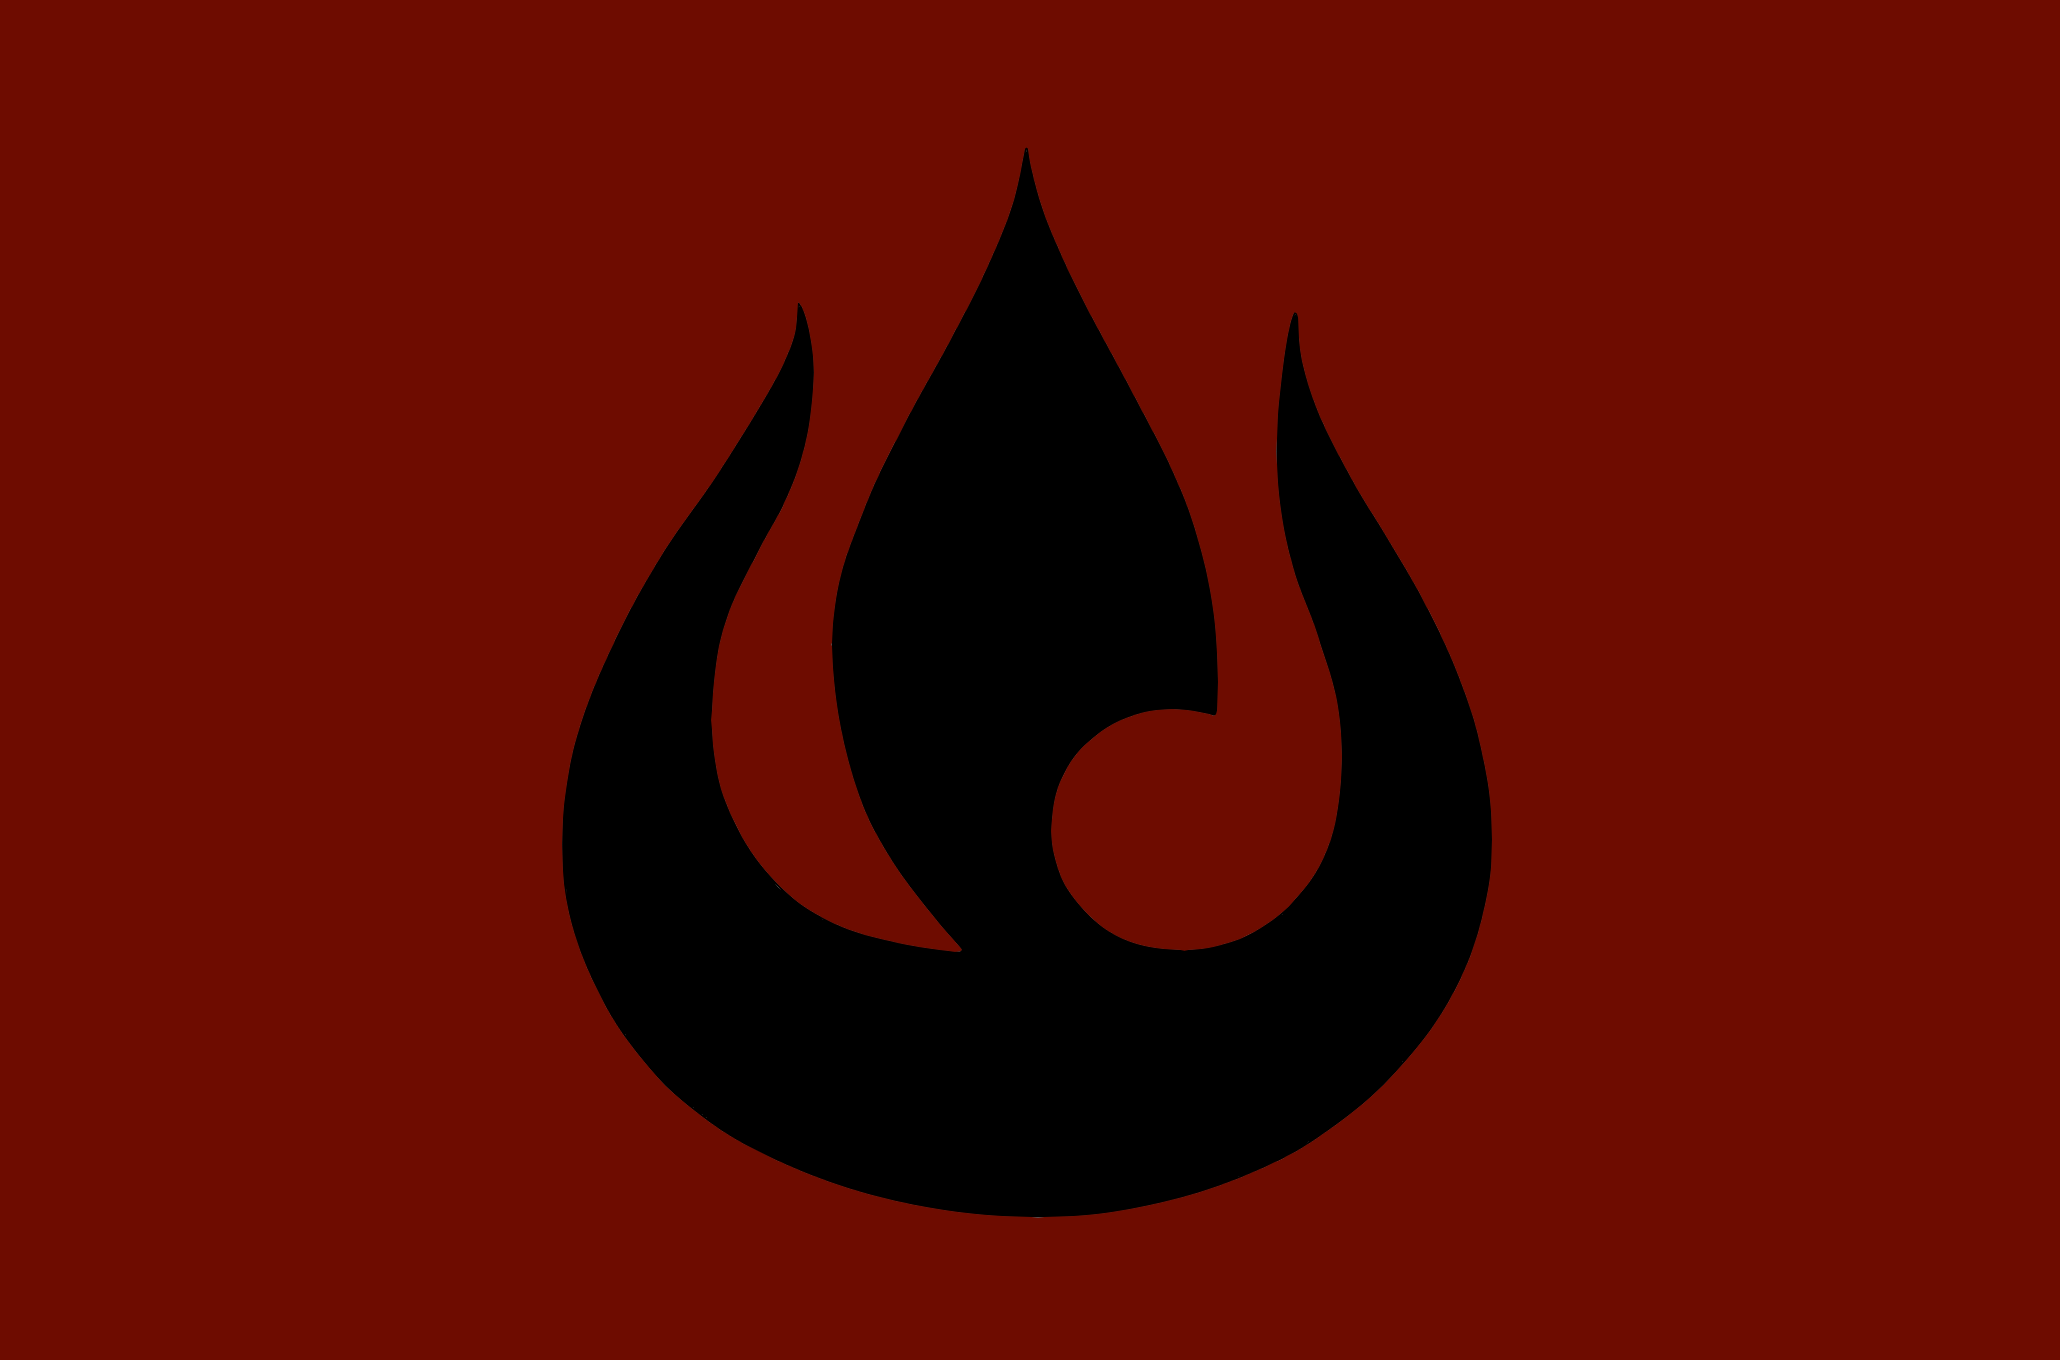 LW4: B. Kamara. Fire nation, Fire nation symbol, Avatar the last airbender